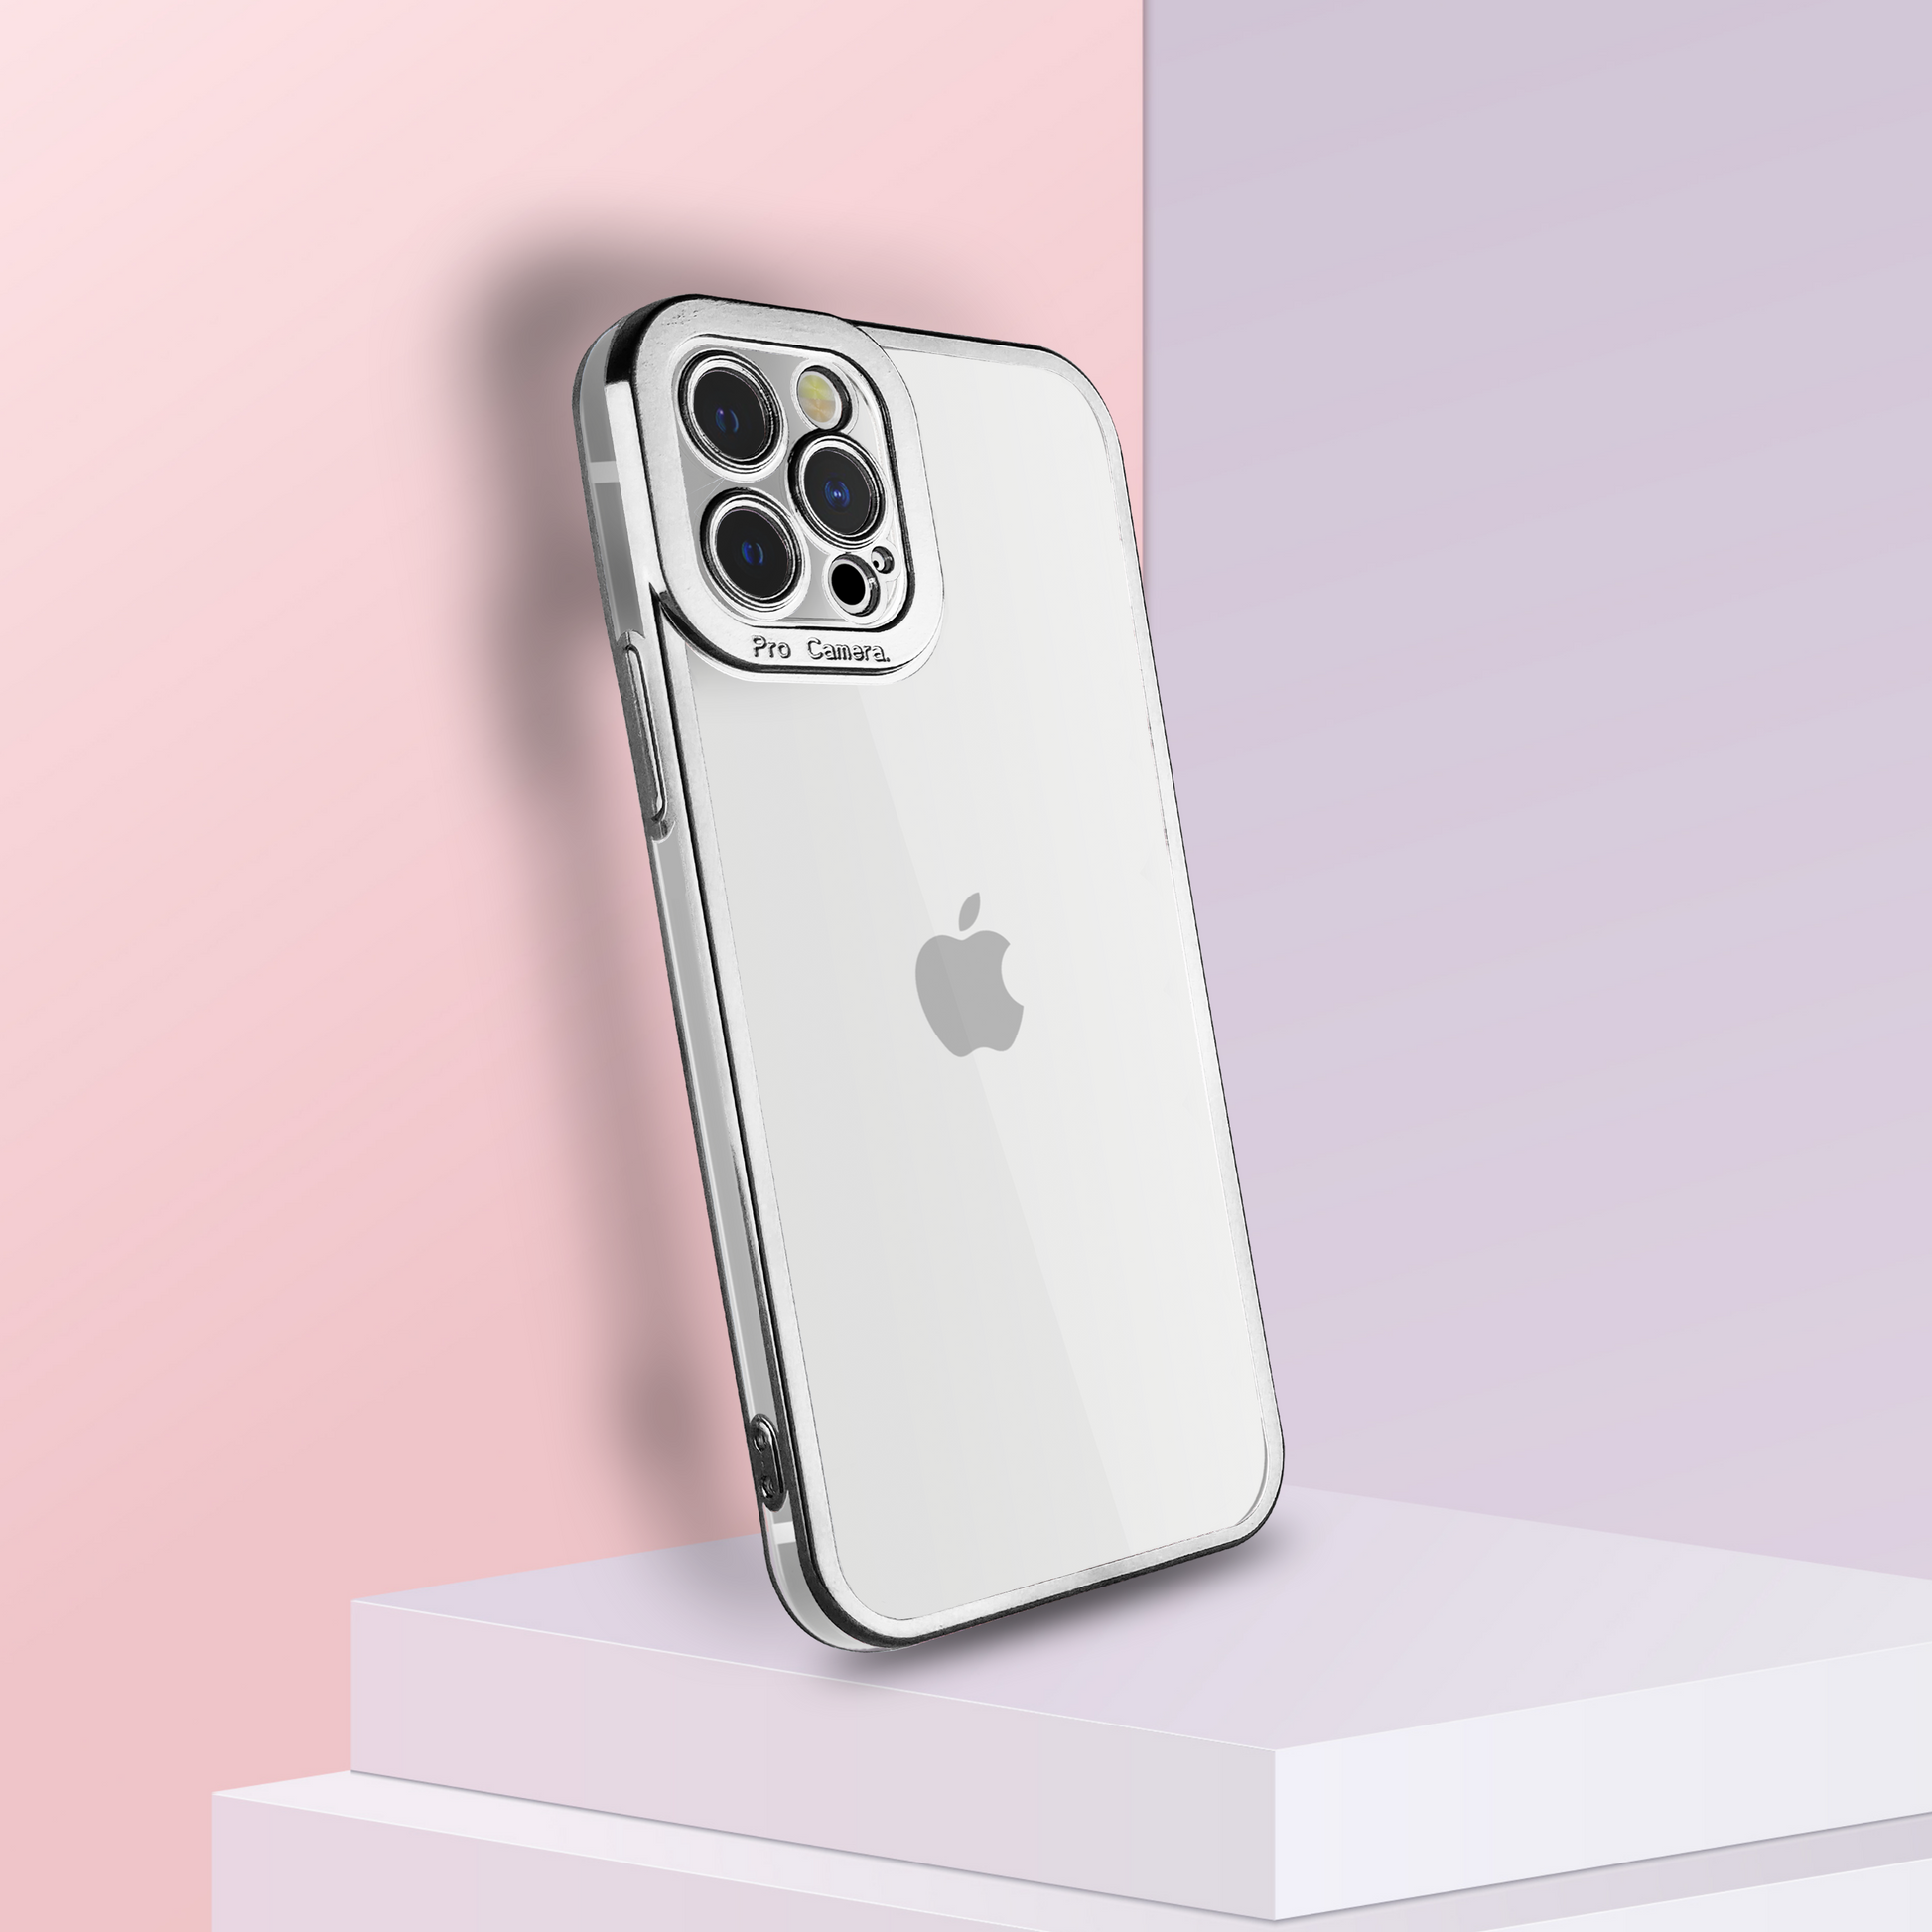 For Apple iPhone 12 Pro LV Design Plating Case White